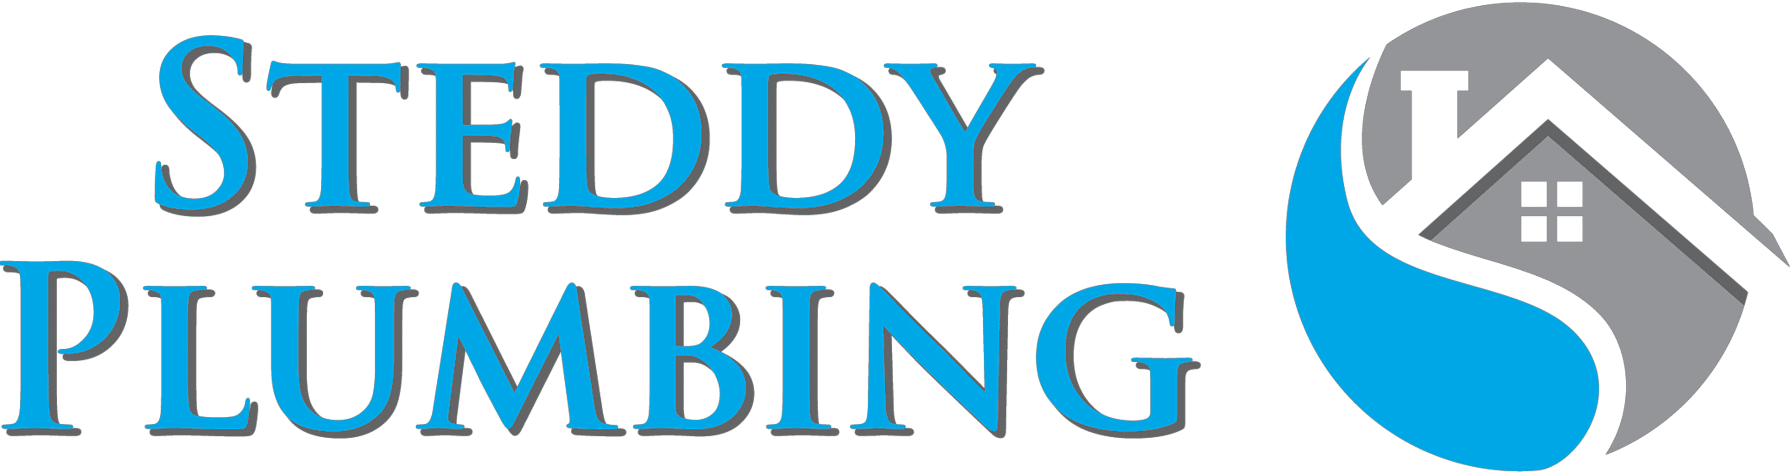 Steddy Plumbing, LLC in Spring, TX | Logo